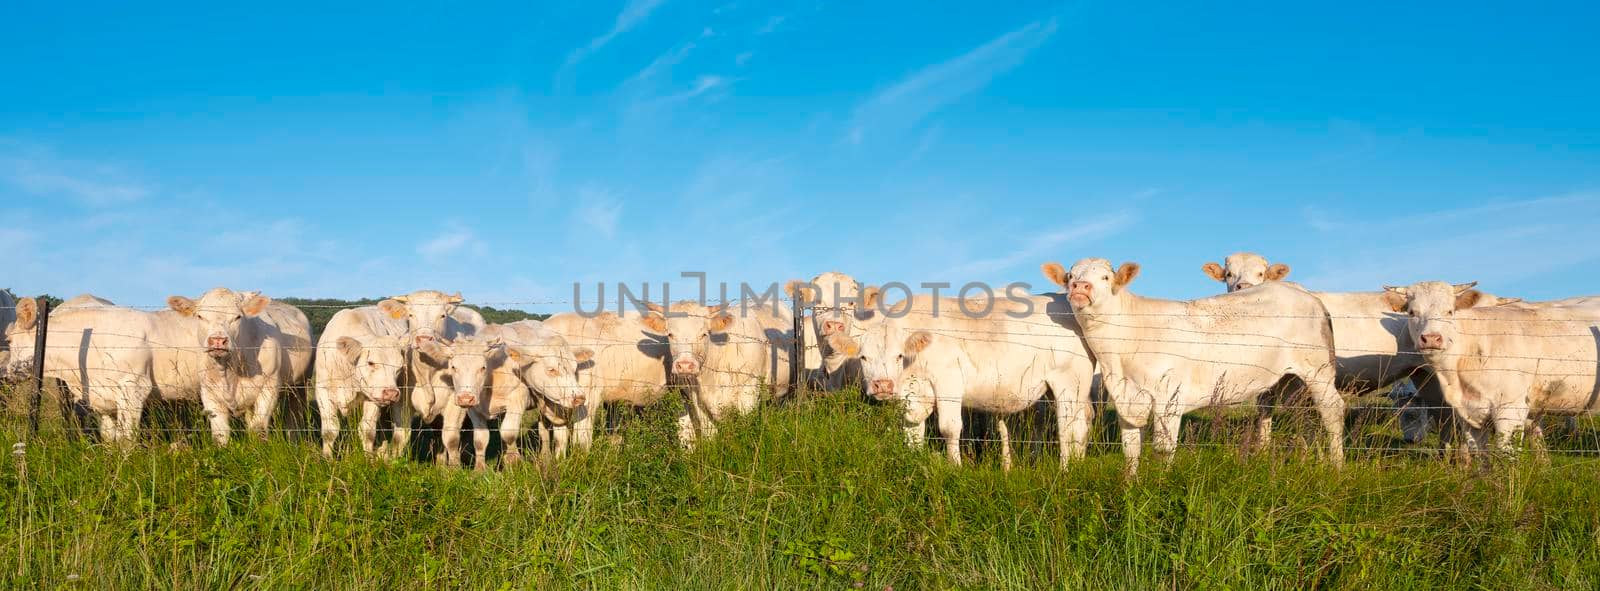 white cows under blue sky in green grassy meadow by ahavelaar